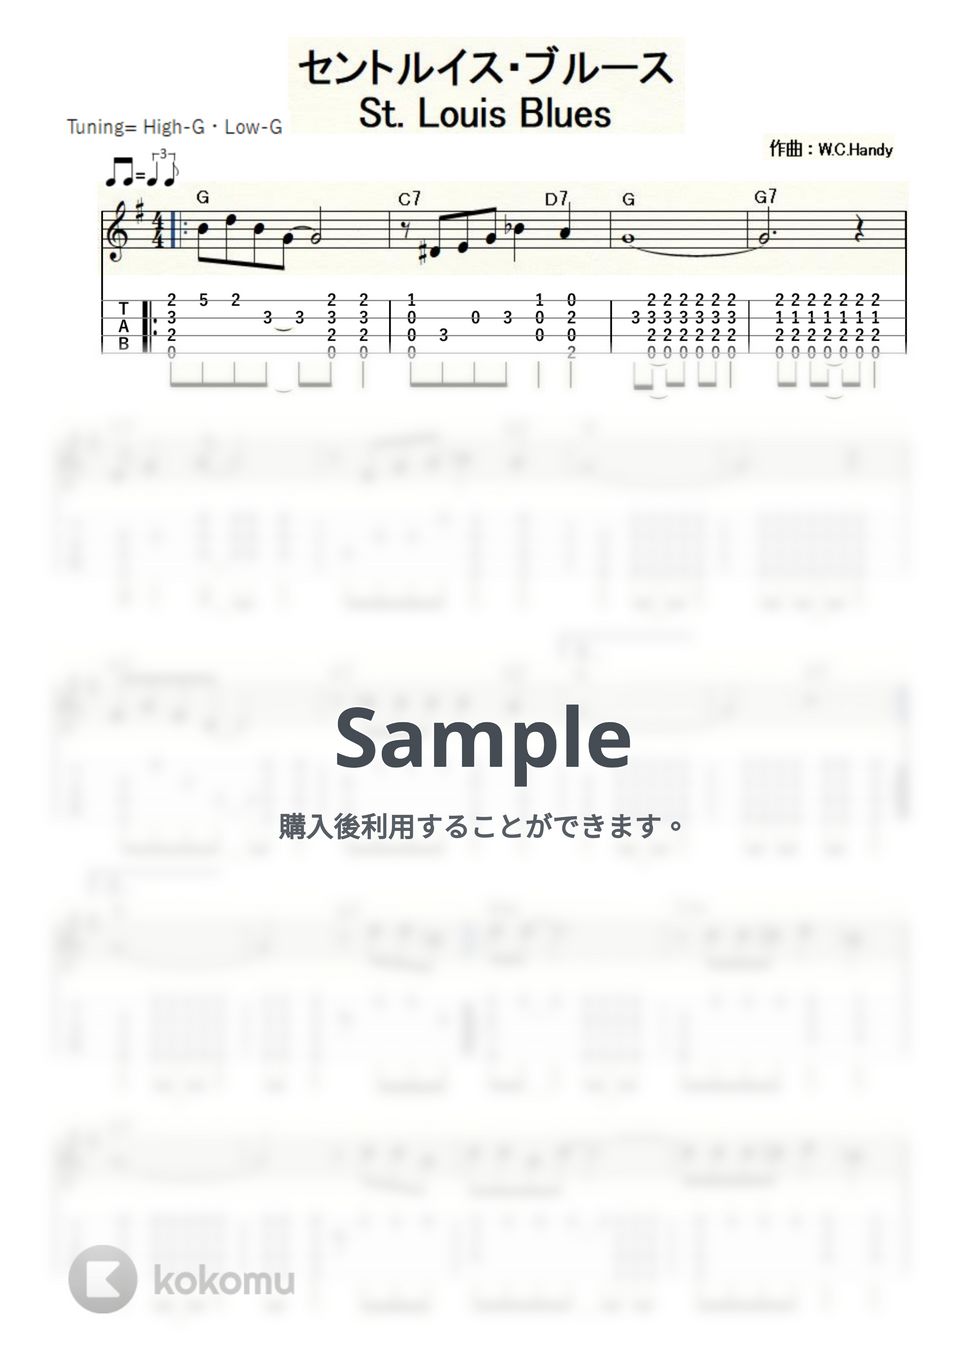 W.C.Handy - St. Louis Blues (ｳｸﾚﾚｿﾛ/High-G・Low-G/中級) by ukulelepapa